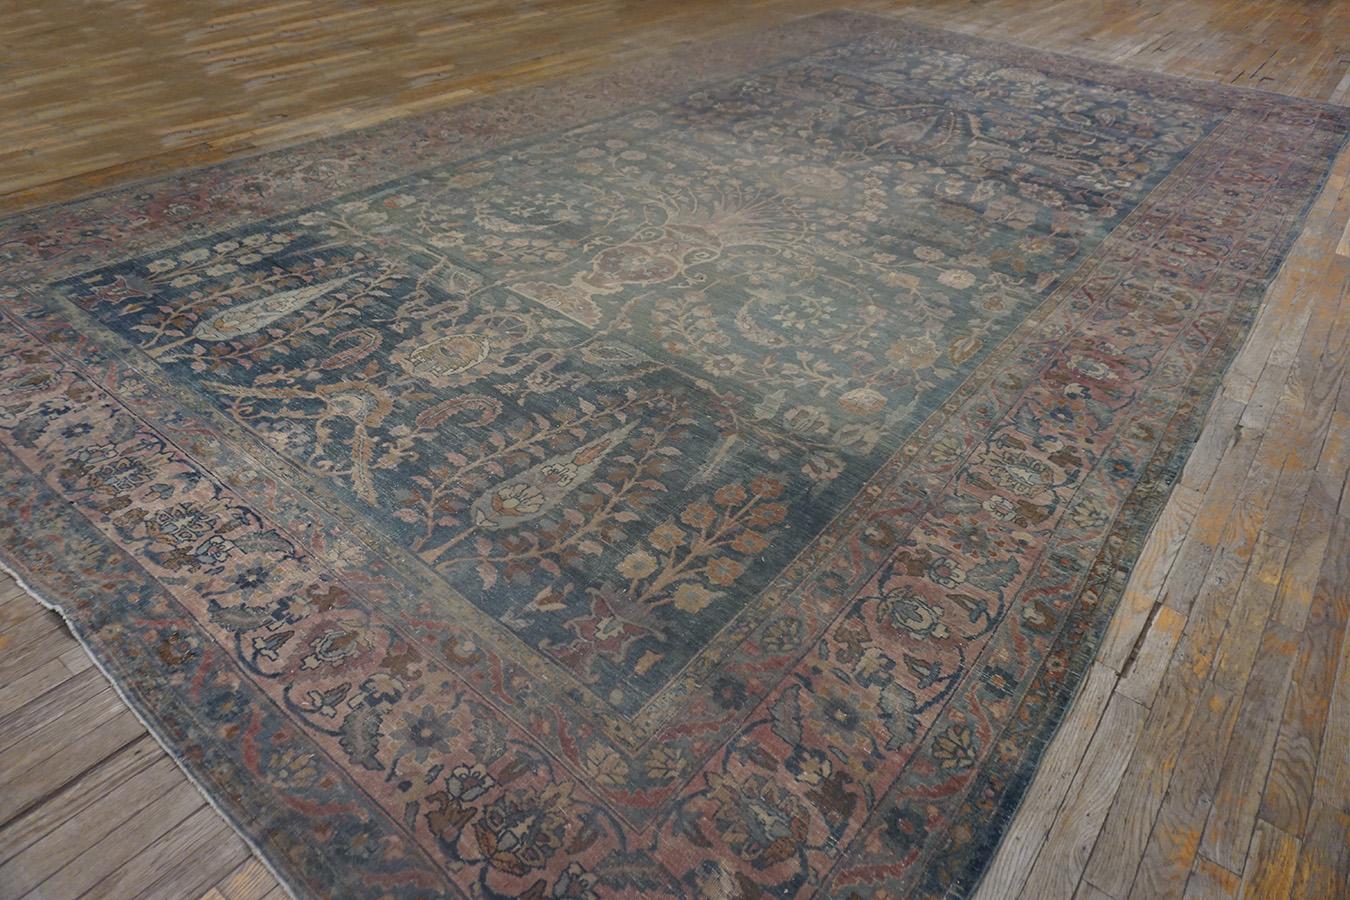 Early 20th Century N.E. Persian Khorassan Moud Carpet
10' x 18'4